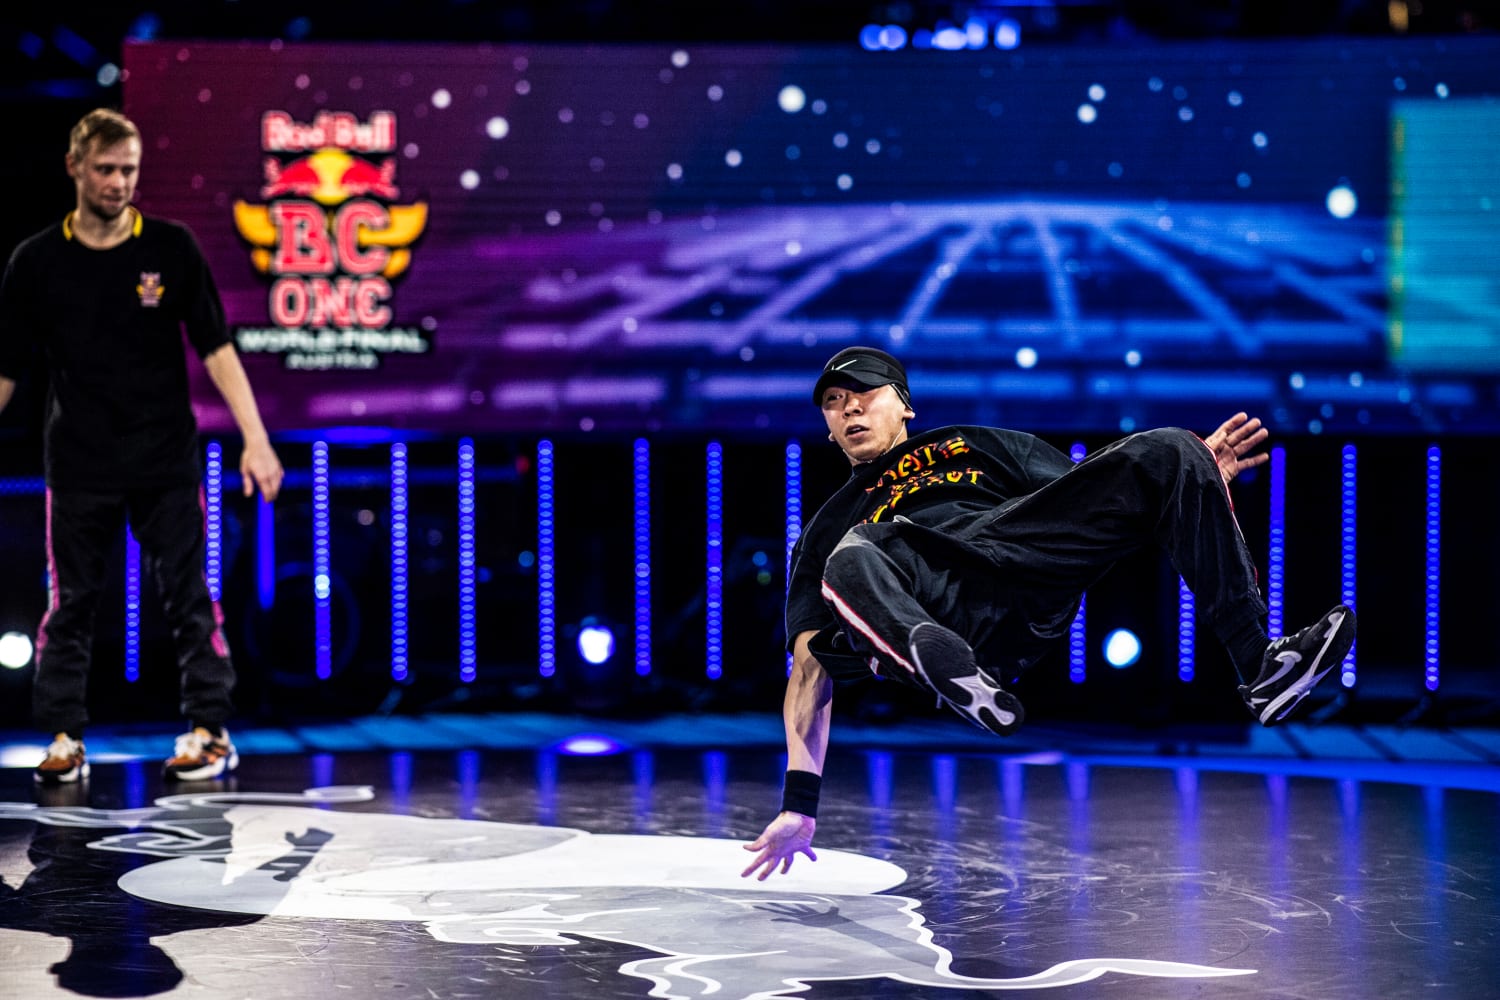 Array Tårer Udgående Red Bull BC One World Final 2020: B-Boy semi-final 1